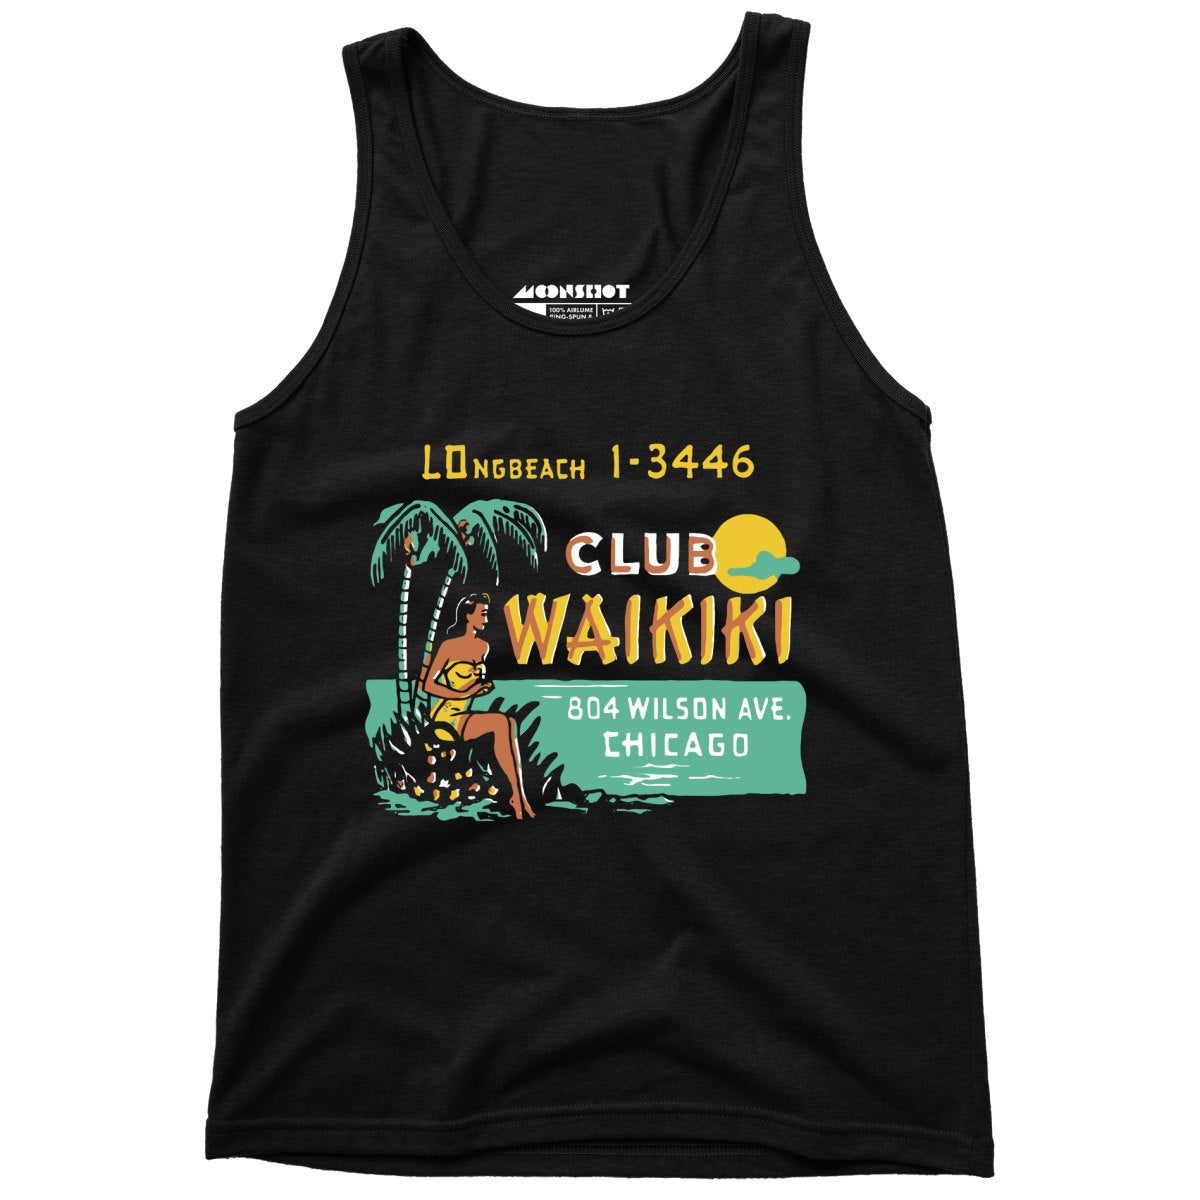 Club Waikiki v2 - Chicago, IL - Vintage Tiki Bar - Unisex Tank Top